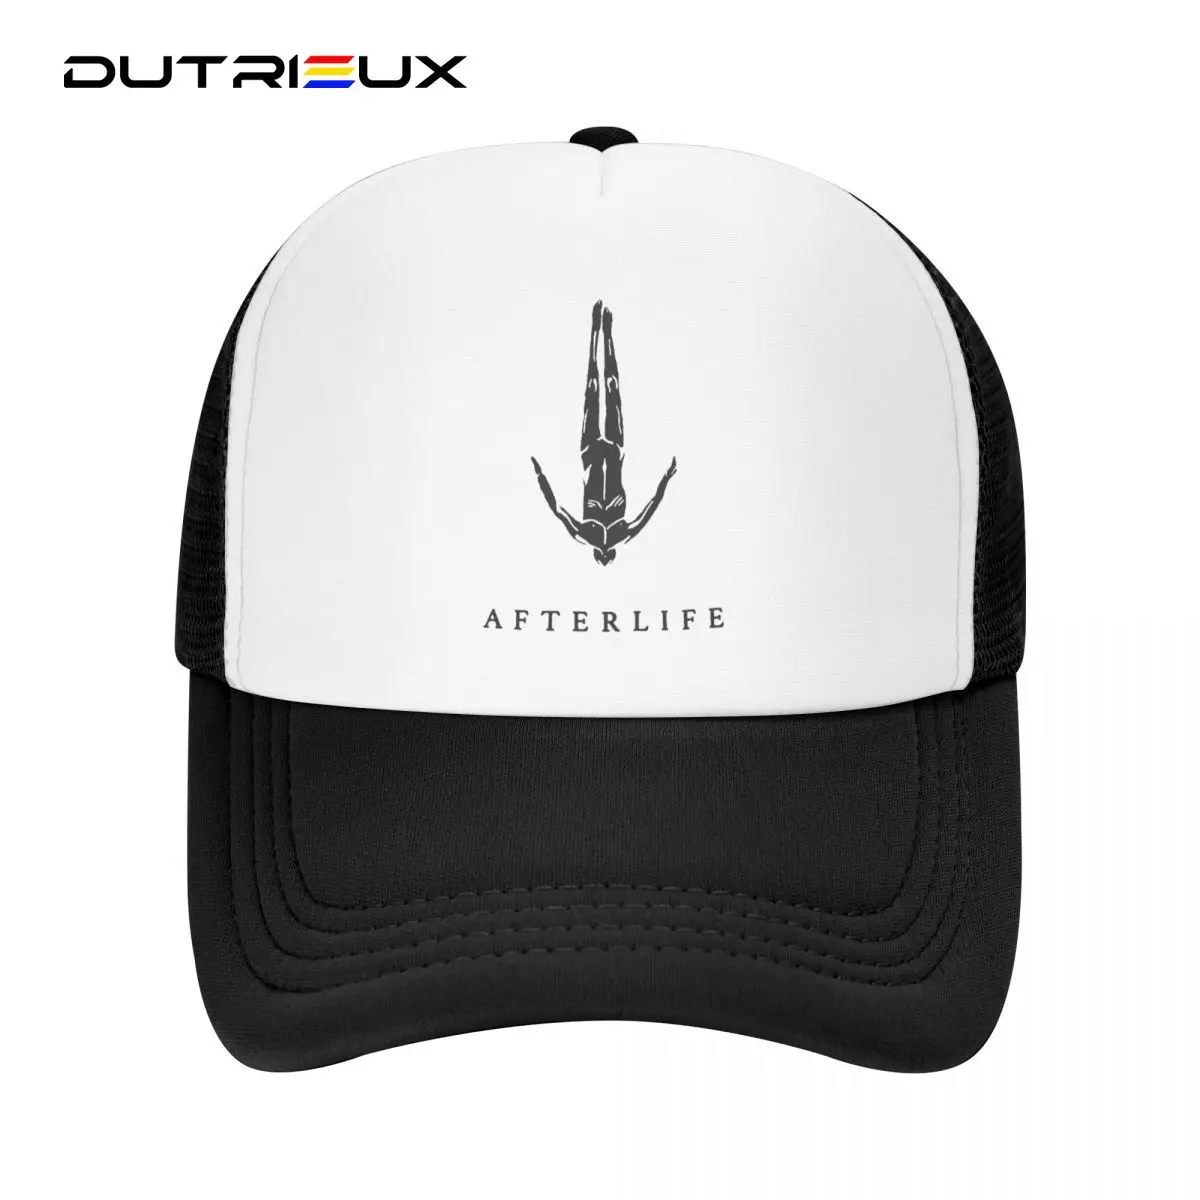 

DUTRIEUX Fashion Unisex Afterlife Trucker Hat Adult Adjustable Baseball Cap Men Women Hip Hop Snapback Hats